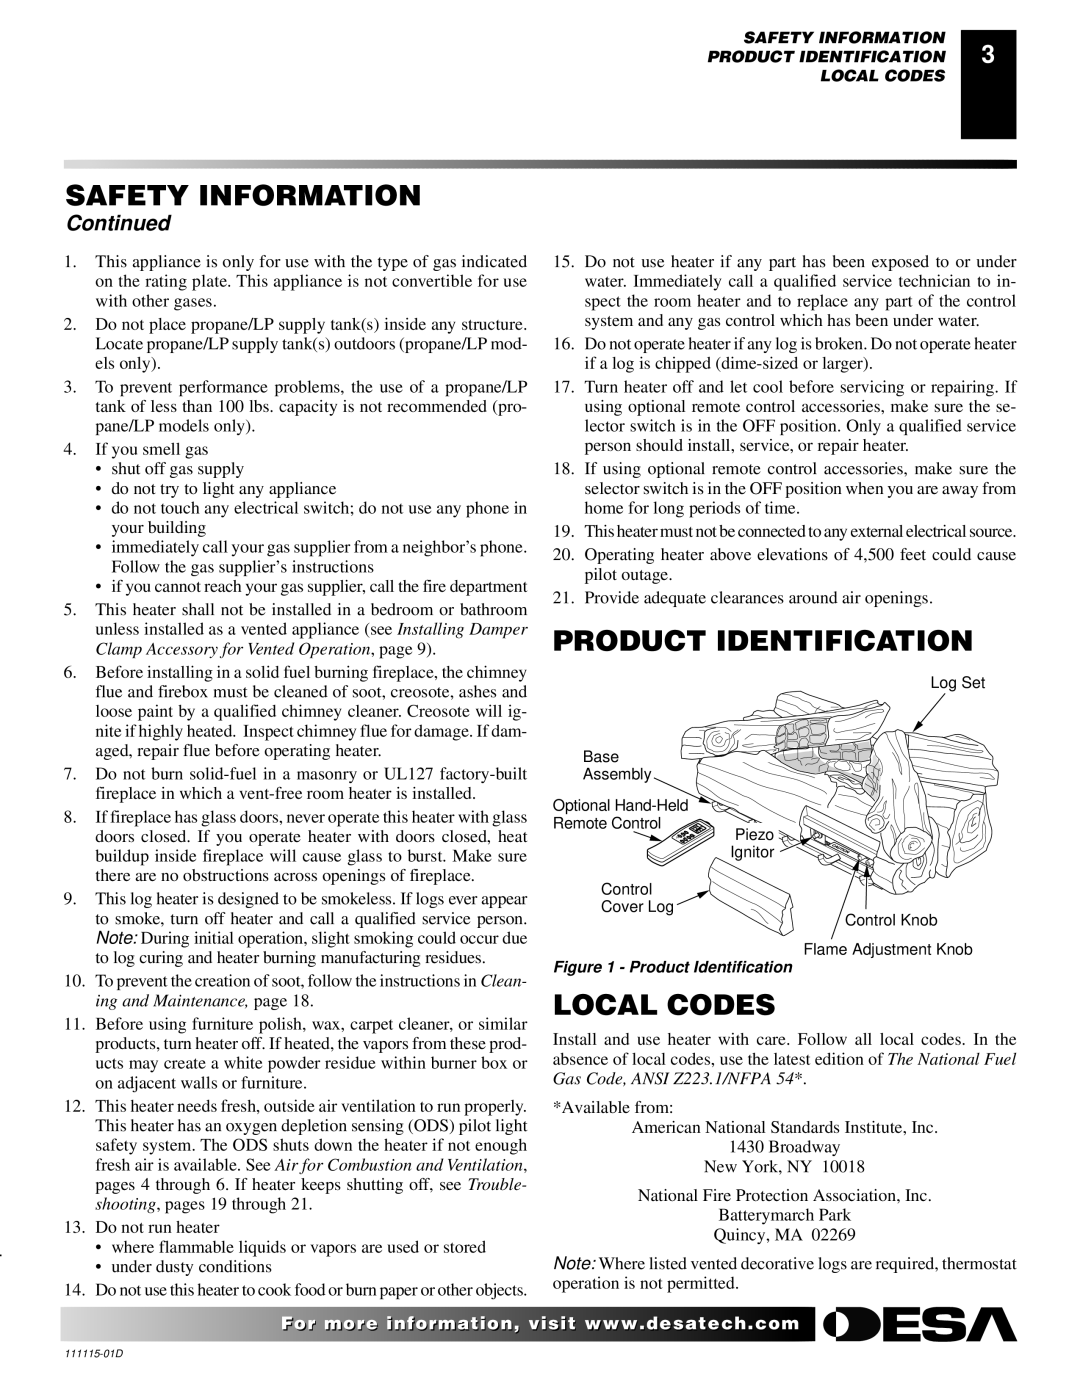 Desa VML27PR installation manual Product Identification, Local Codes 